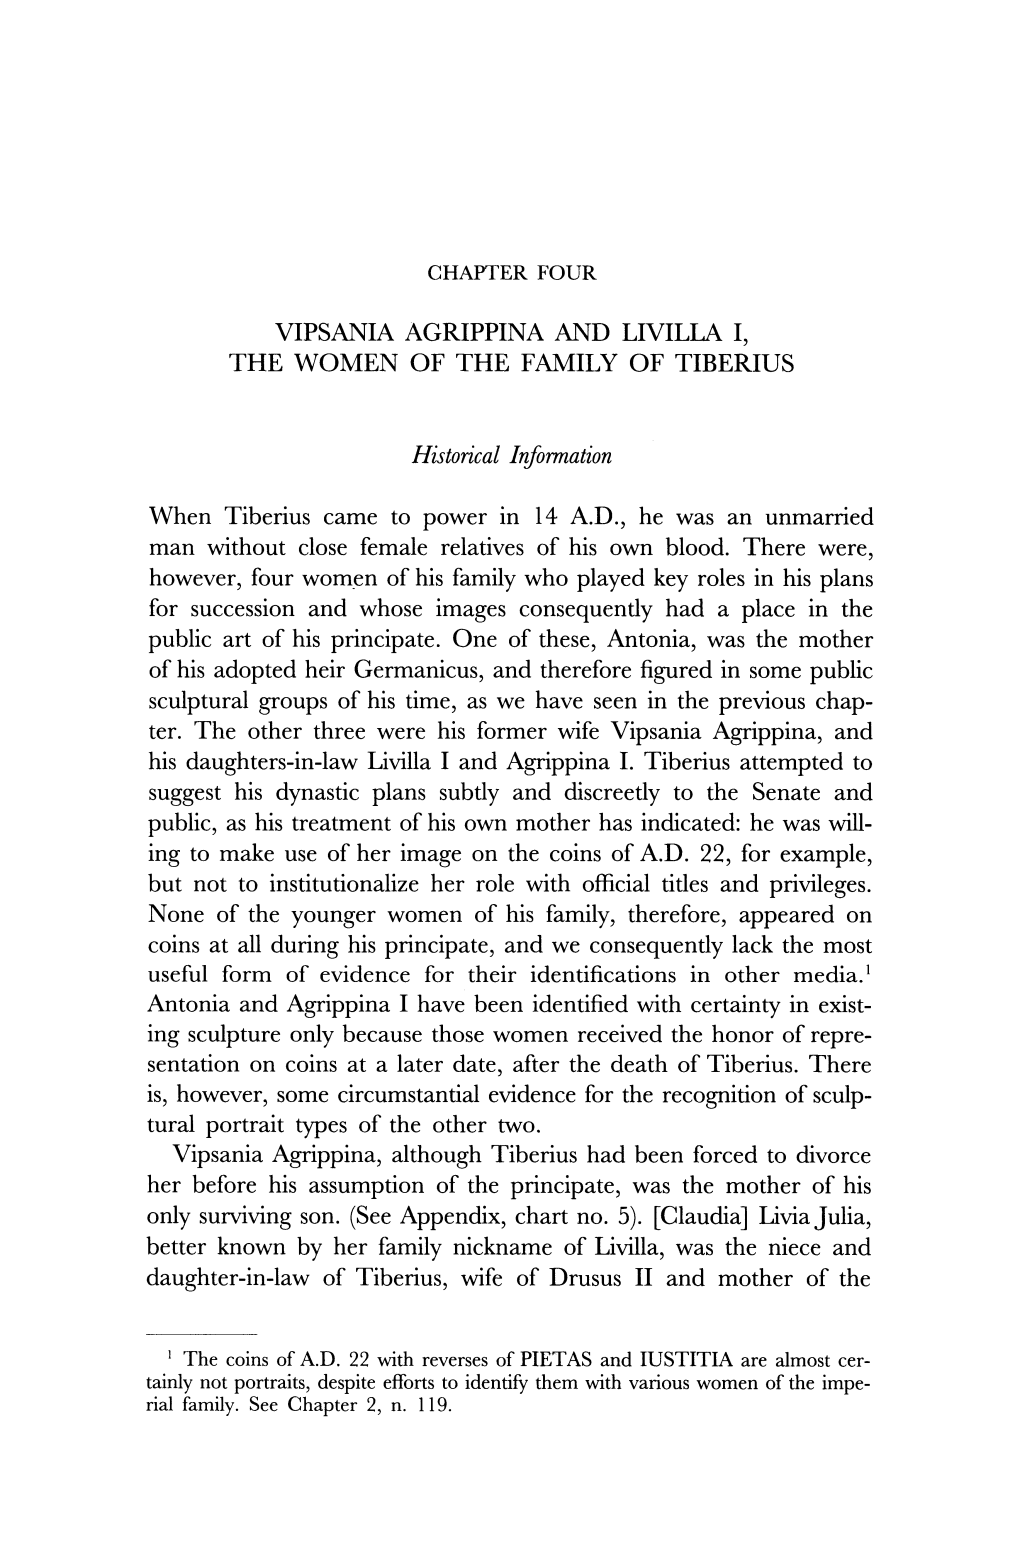 Vipsania Agrippina and Livilla I, the Women of the Family of Tiberius